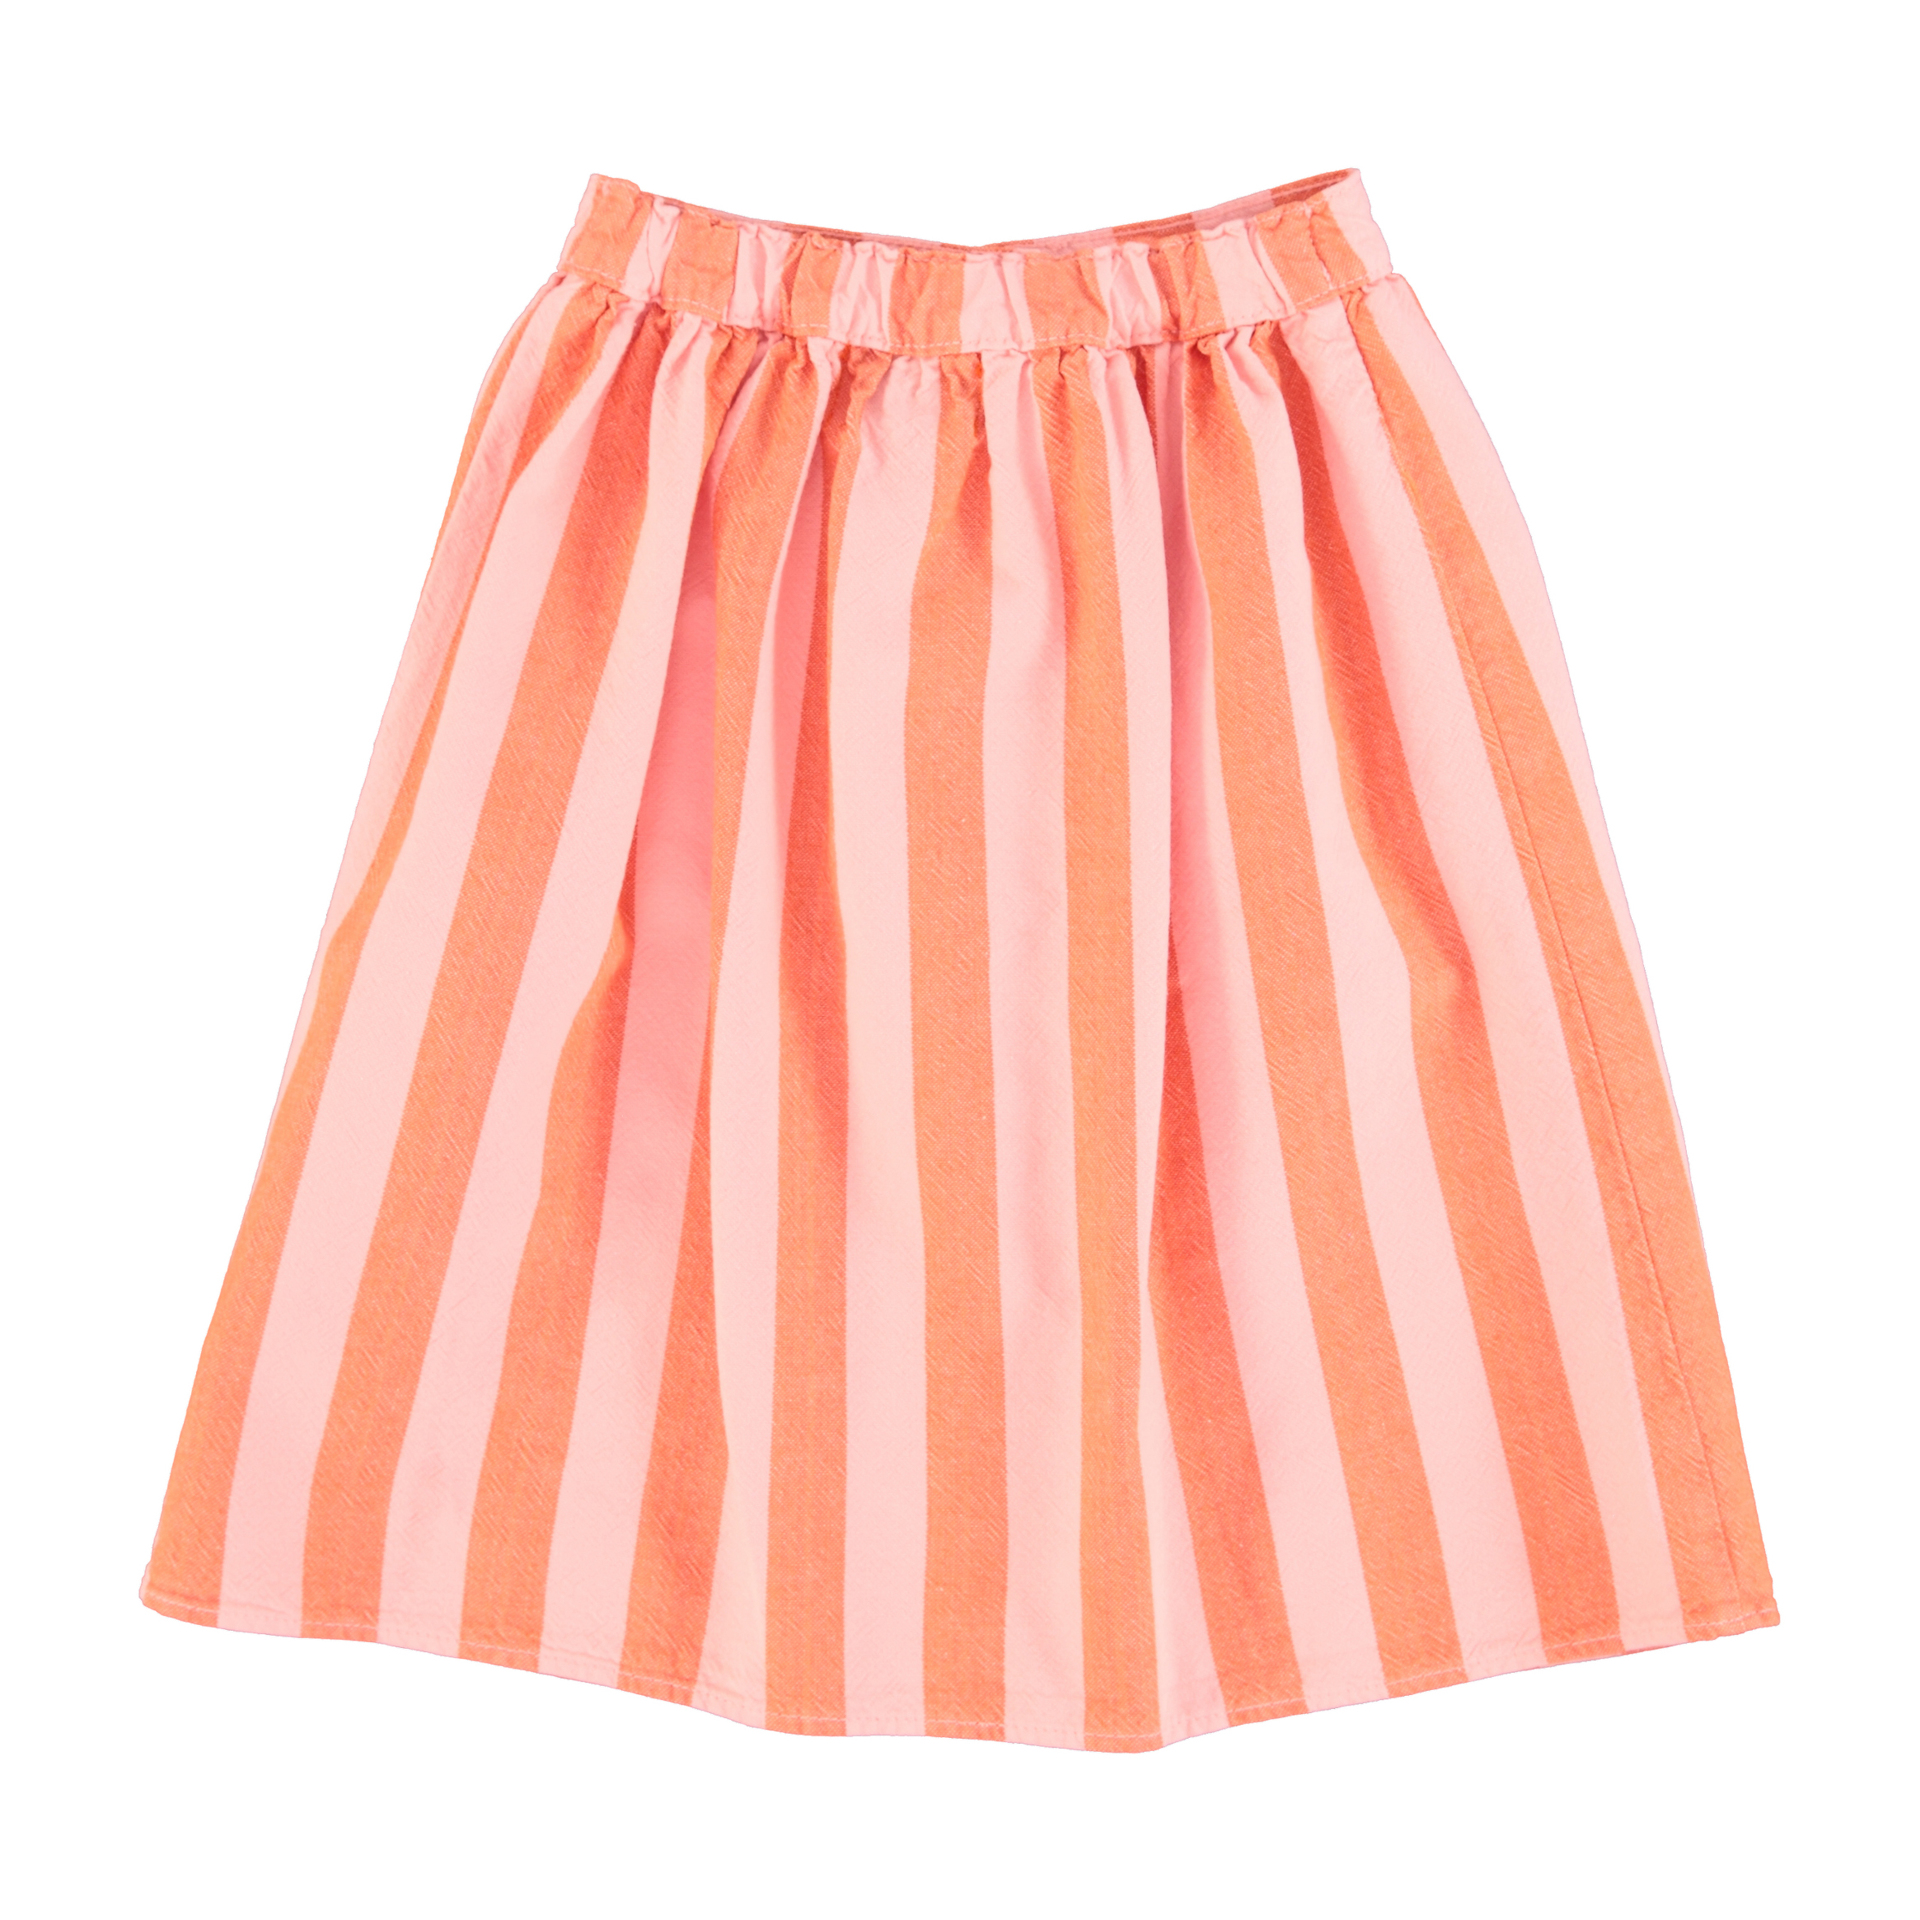 Spódnica orange&pink stripes 1